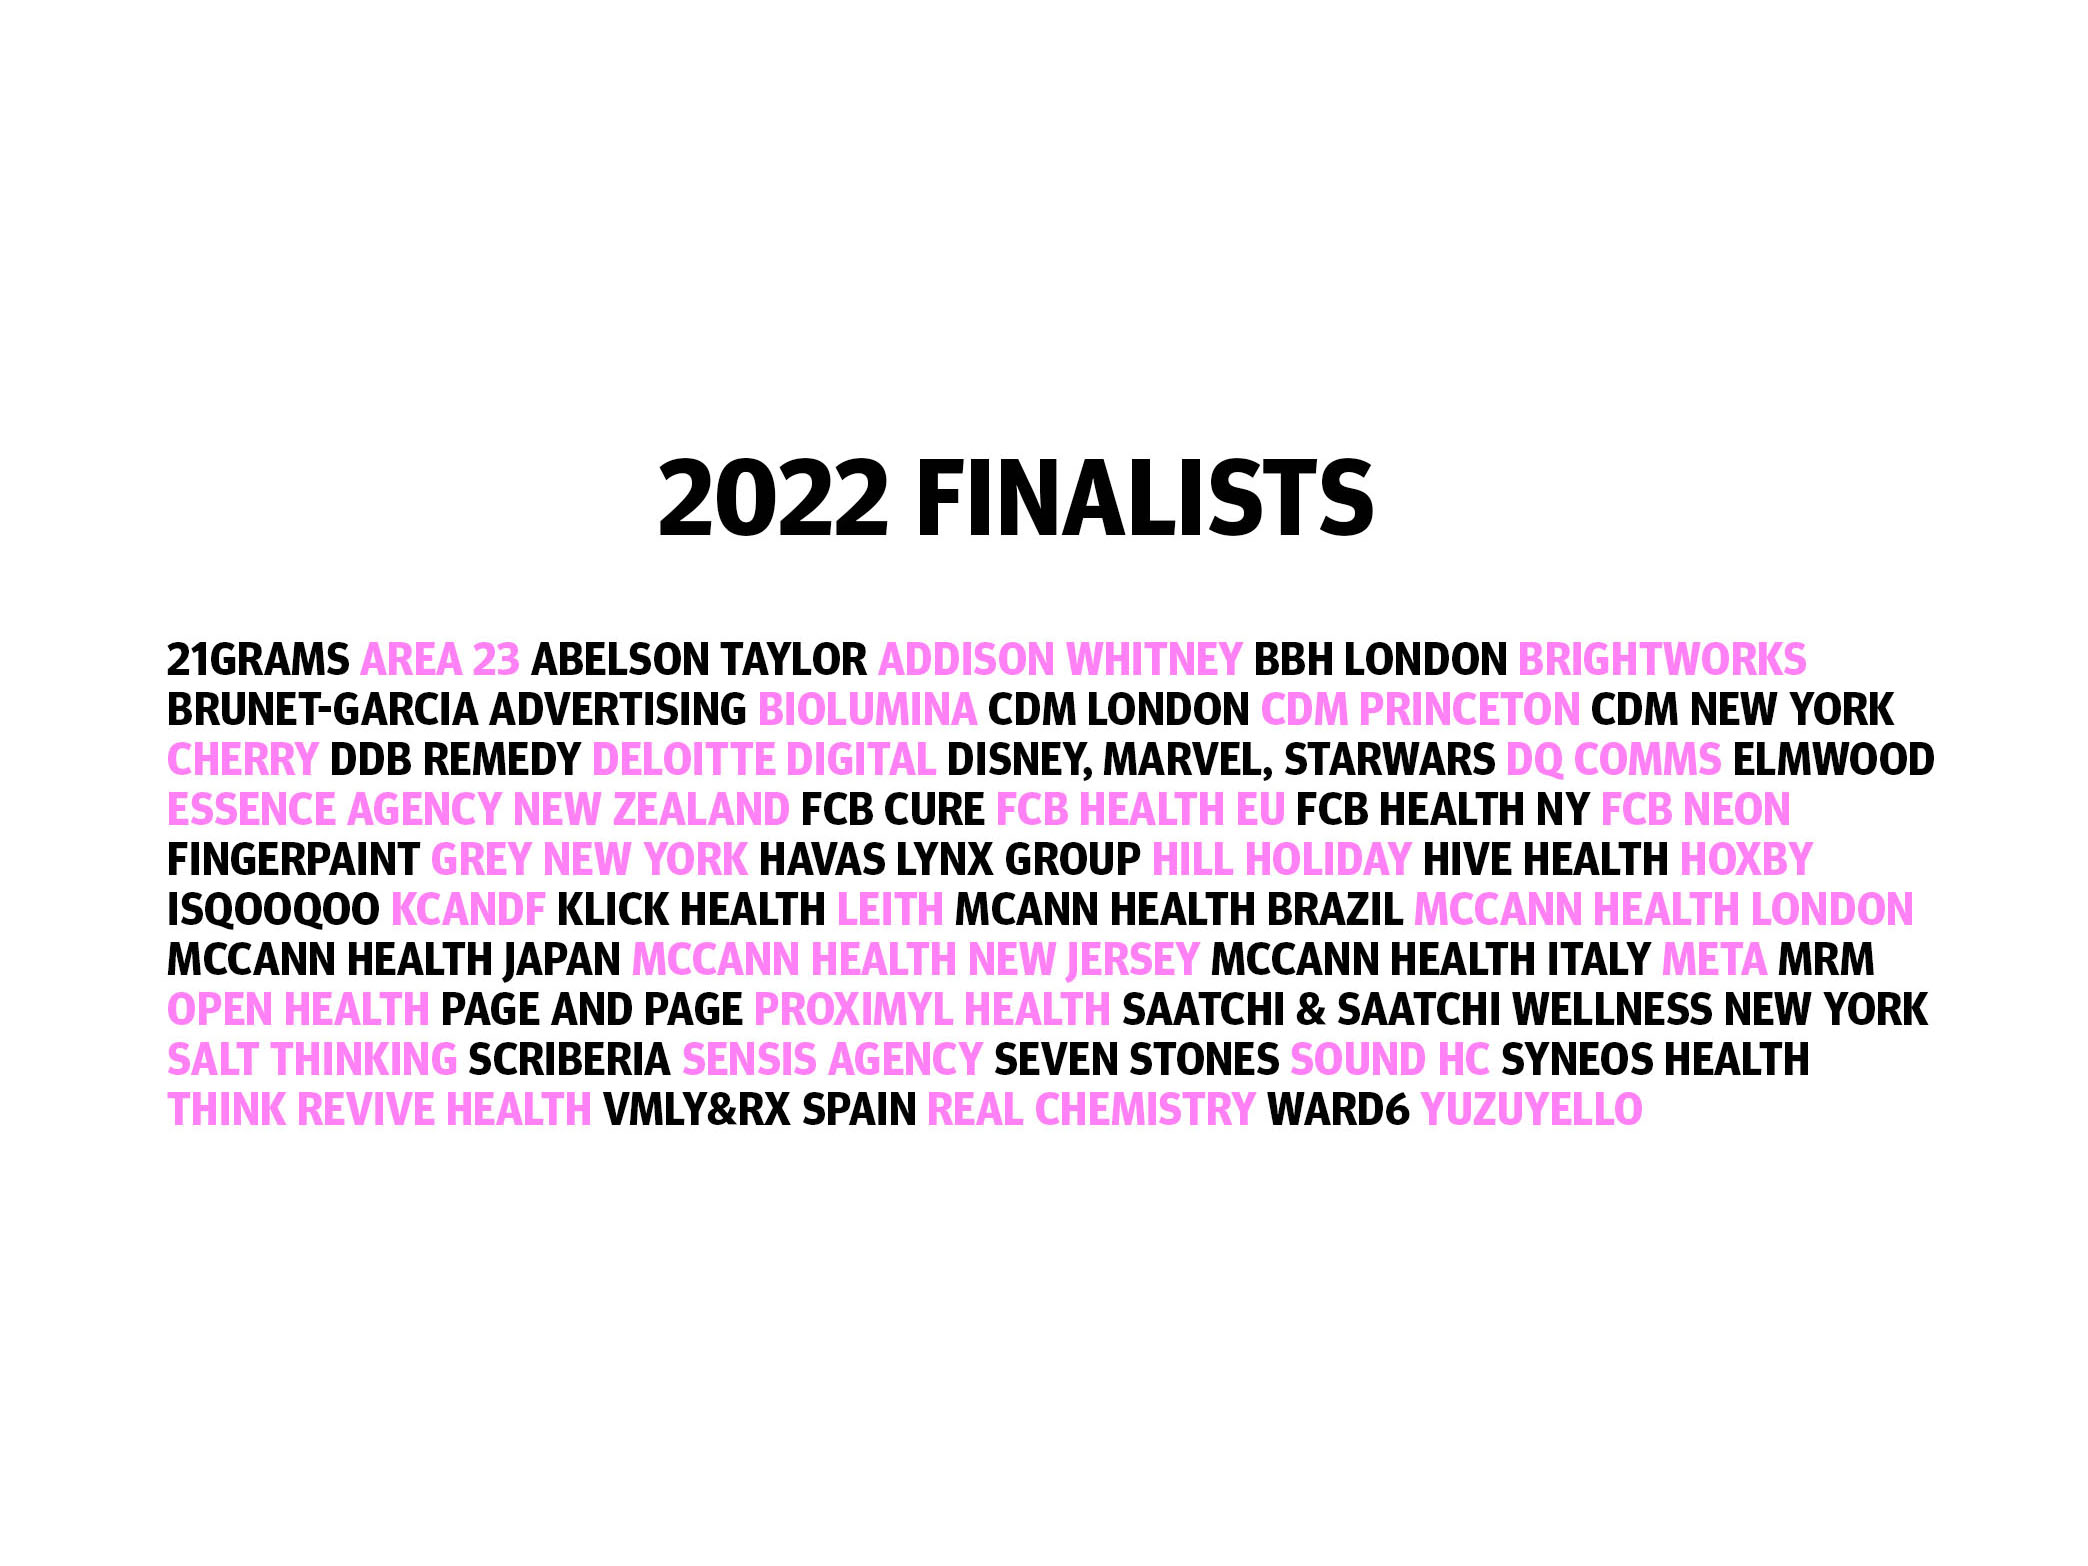 The Creative Floor Awards 2022 announces finalists